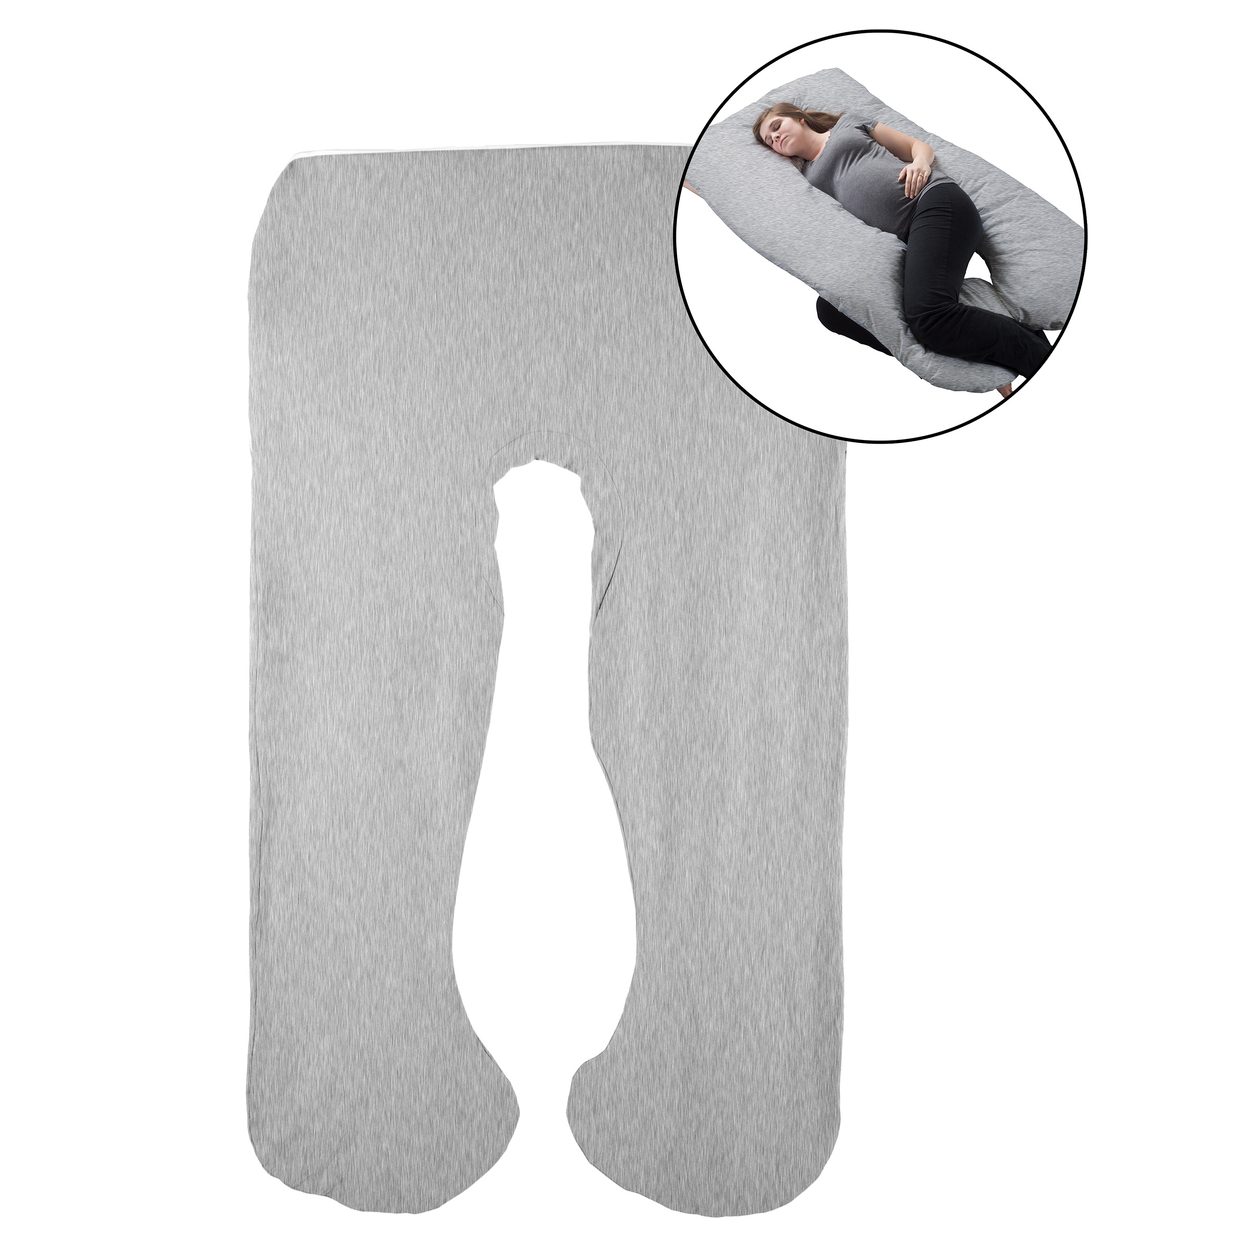 Gray U Shaped Full Body Pregnancy Pillow Cover Case Zipper 100% Cotton Washable